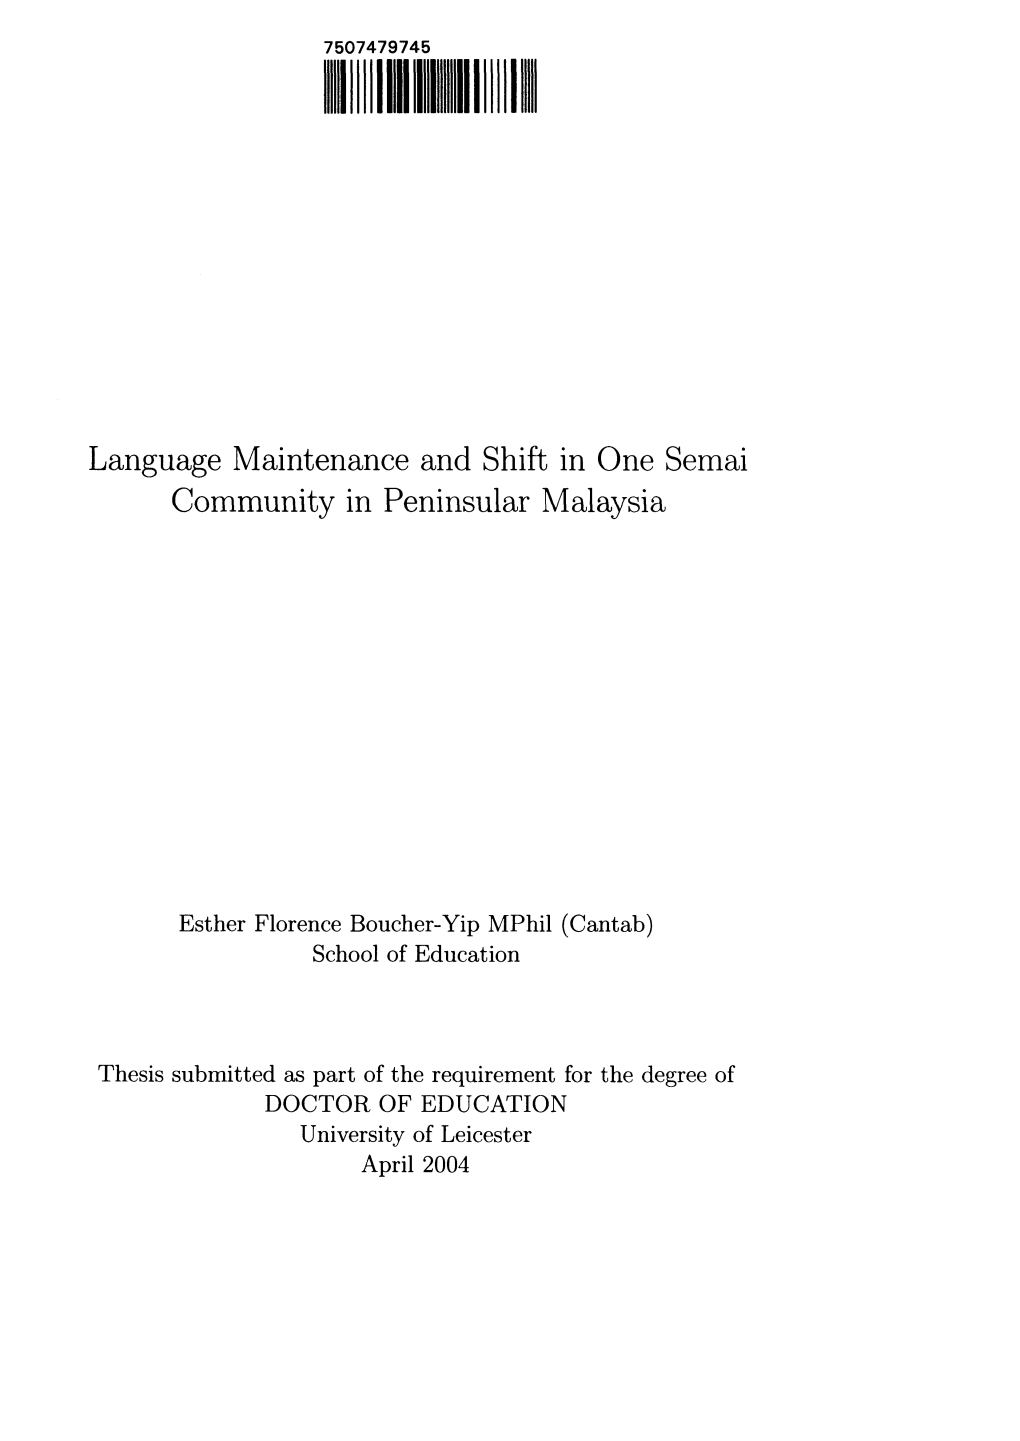 Language Maintenance and Shift in One Semai Community in Peninsular Malaysia